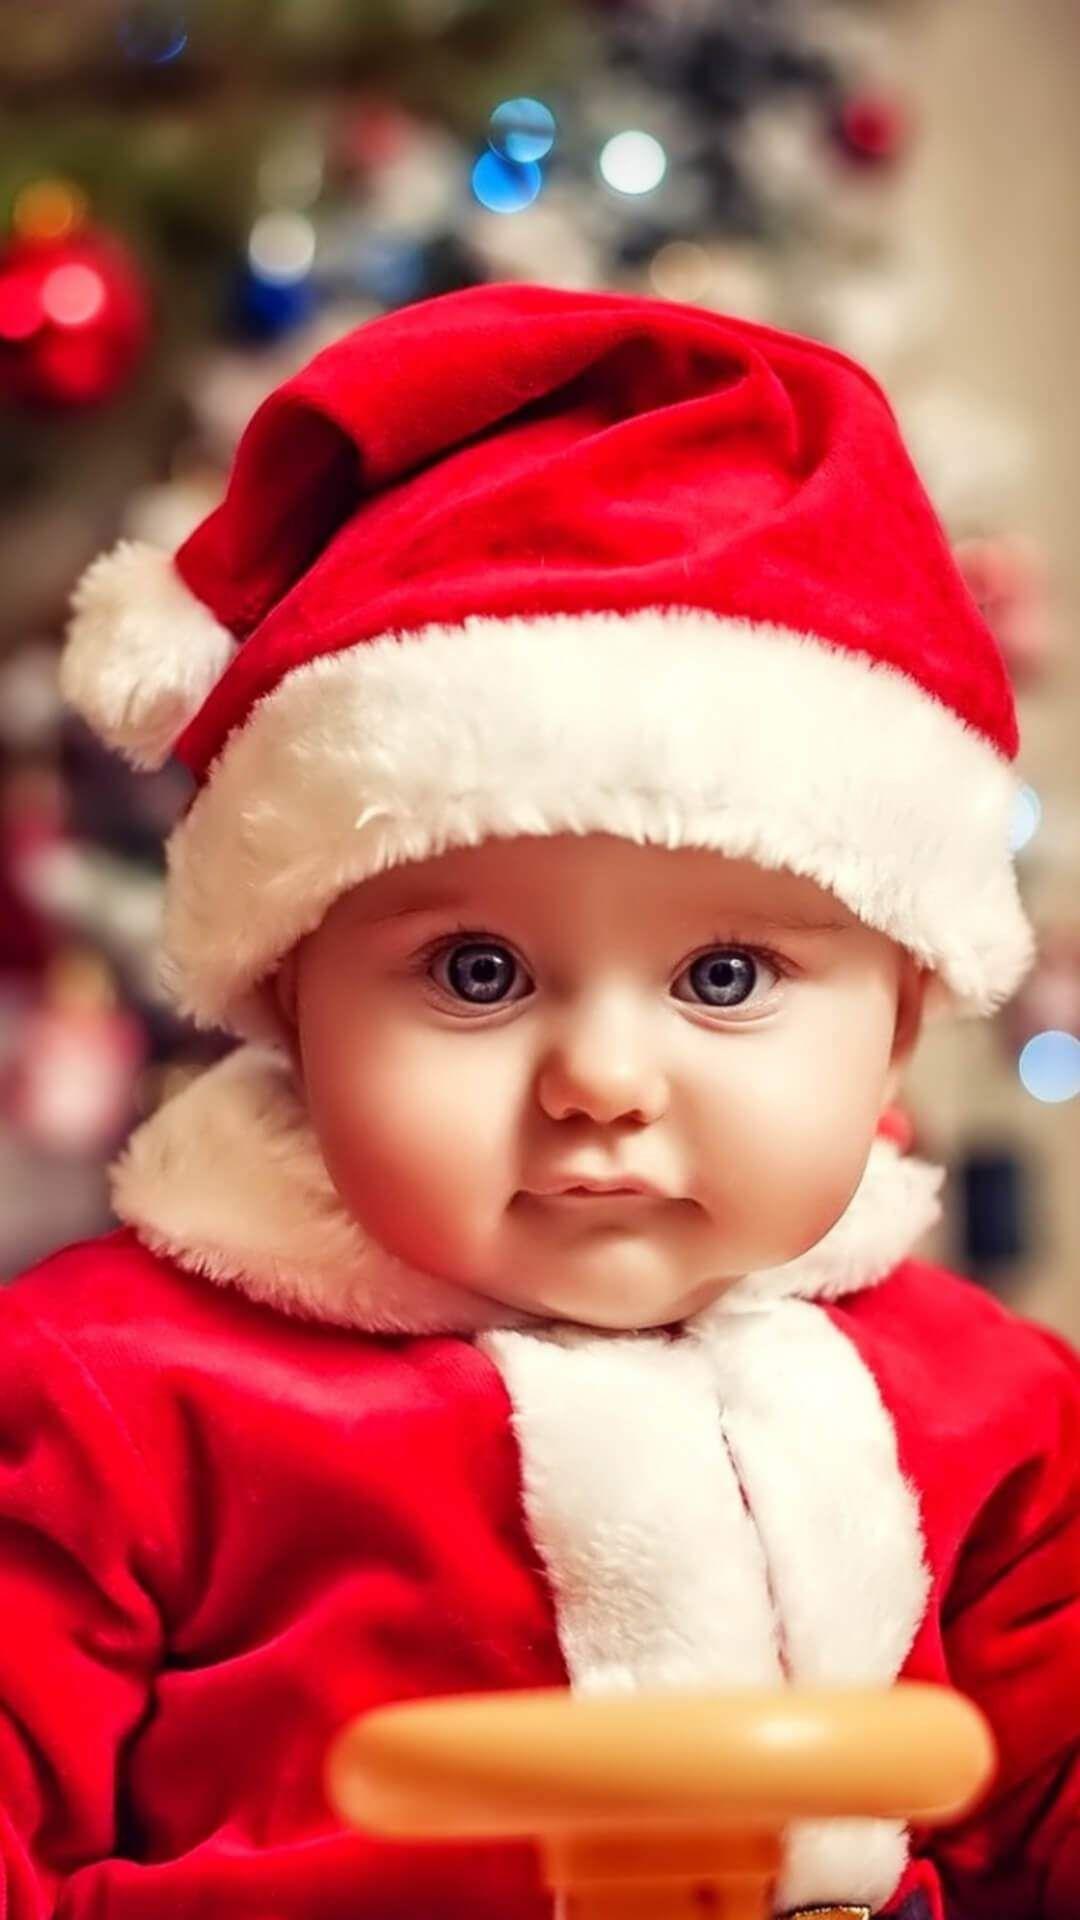 Cute baby on Pinterest